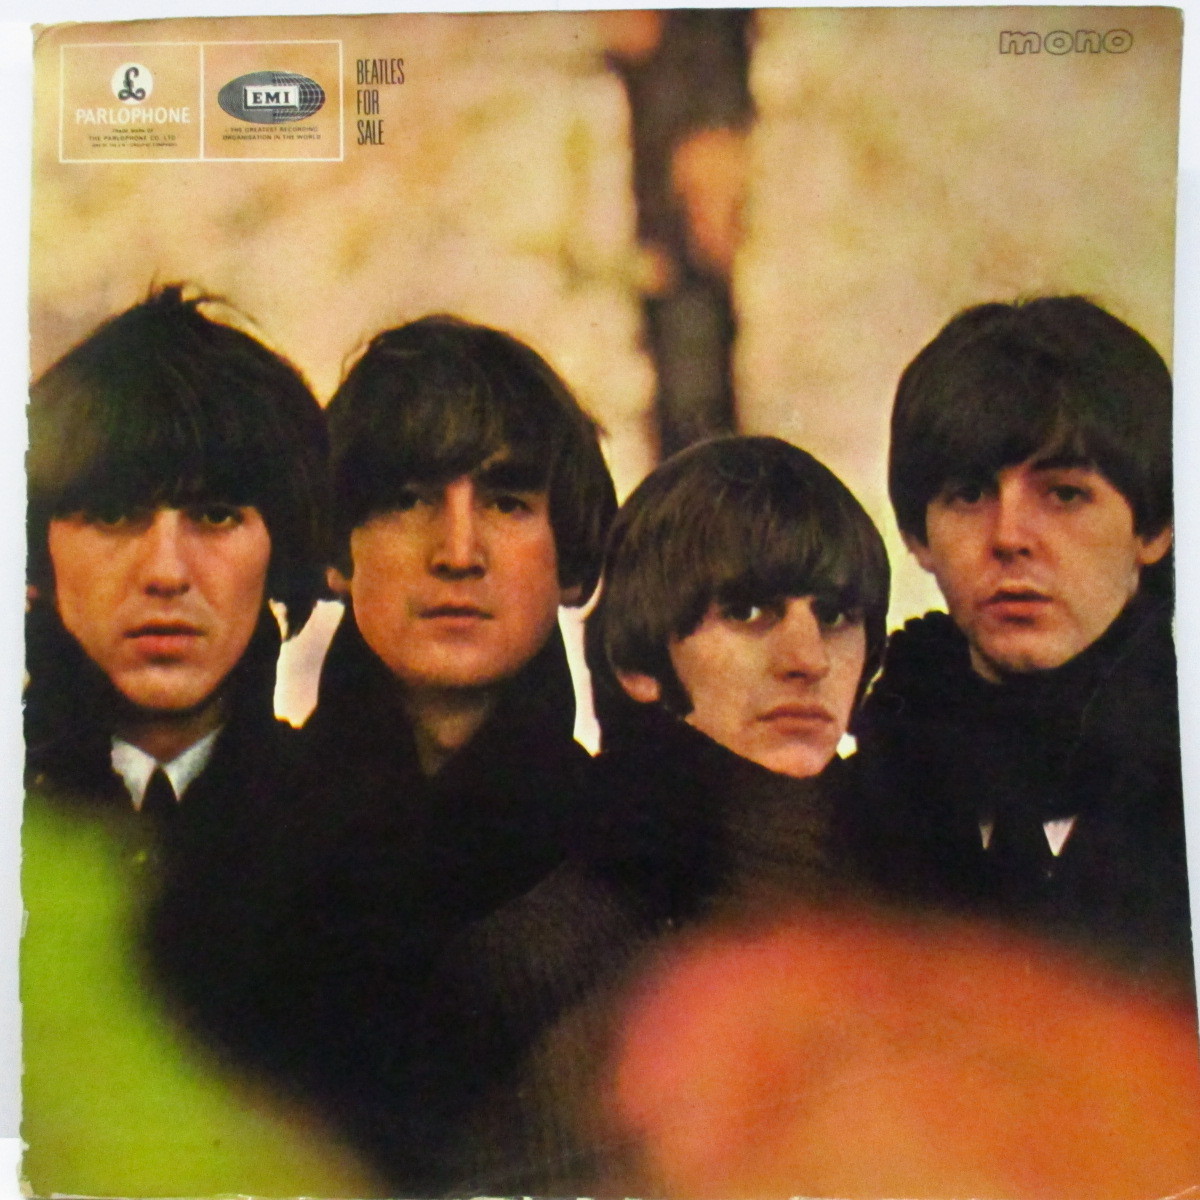 BEATLES-Beatles For Sale (UK オリジナル「モノラル」LP/Outline Mono CGS_画像1